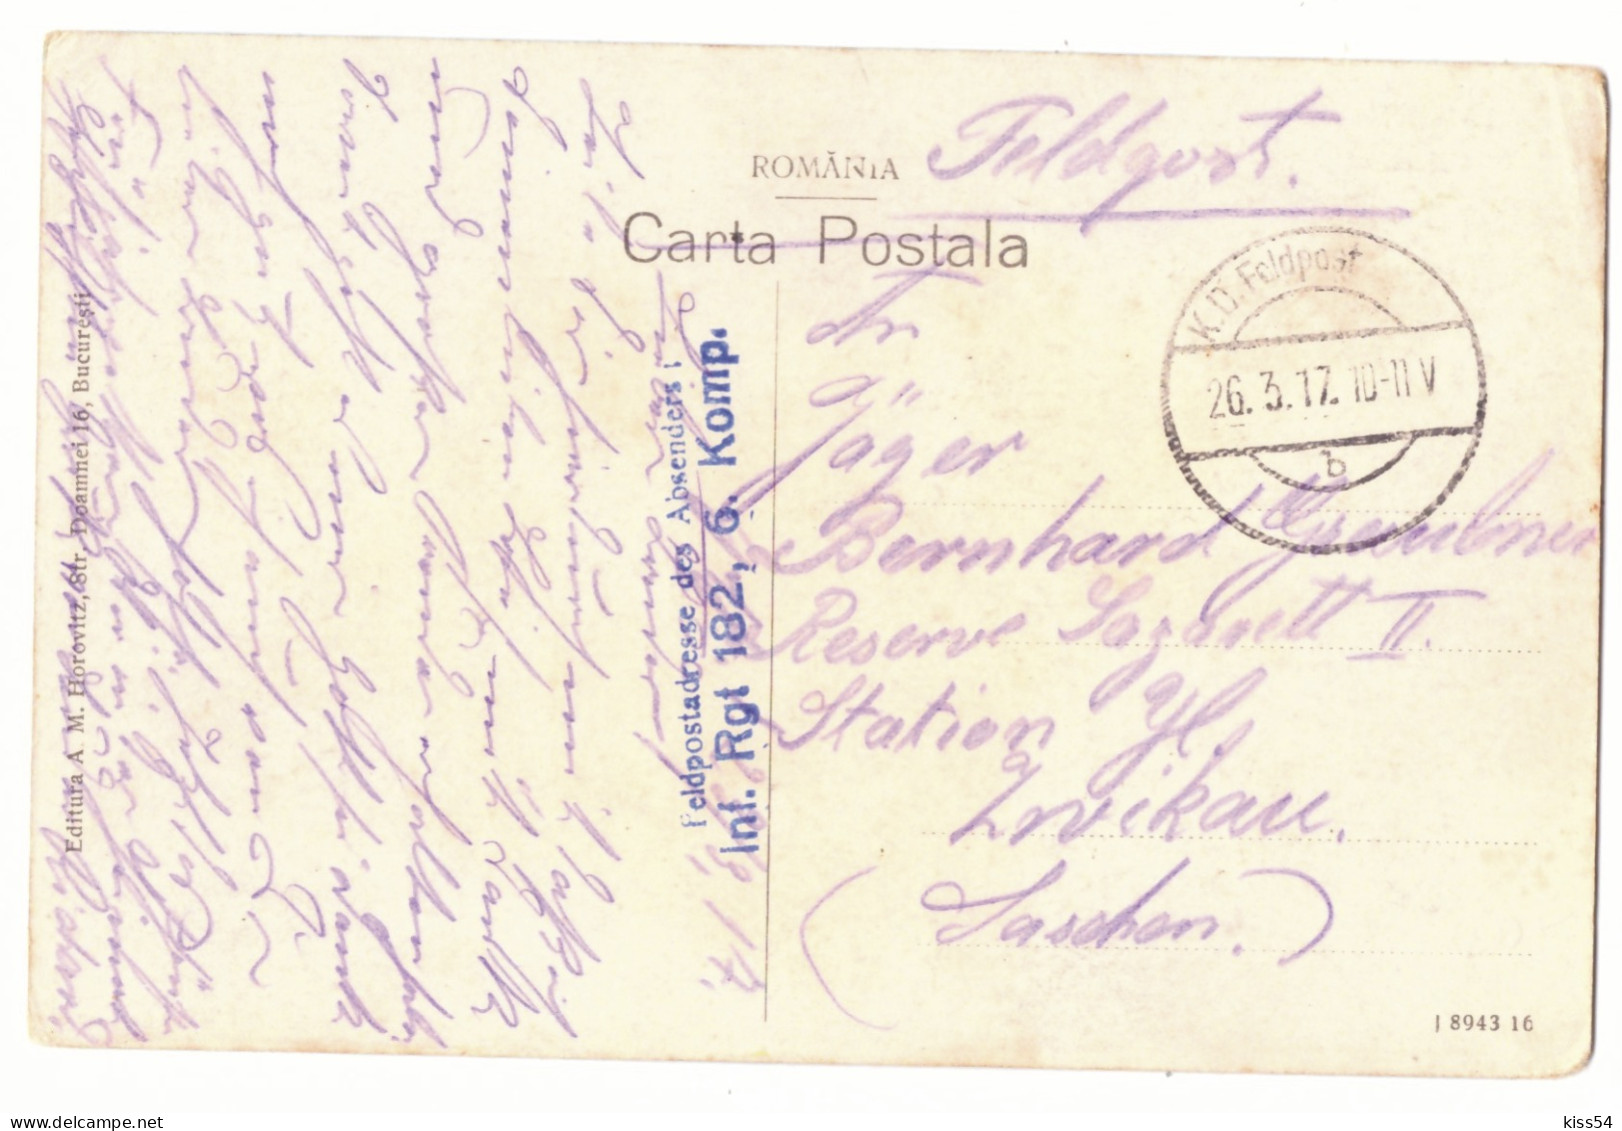 RO 52 - 19911 RM. VALCEA, Ave. Tudor Vladimirescu, Romania - Old Postcard, CENSOR - Used - 1917 - Romania